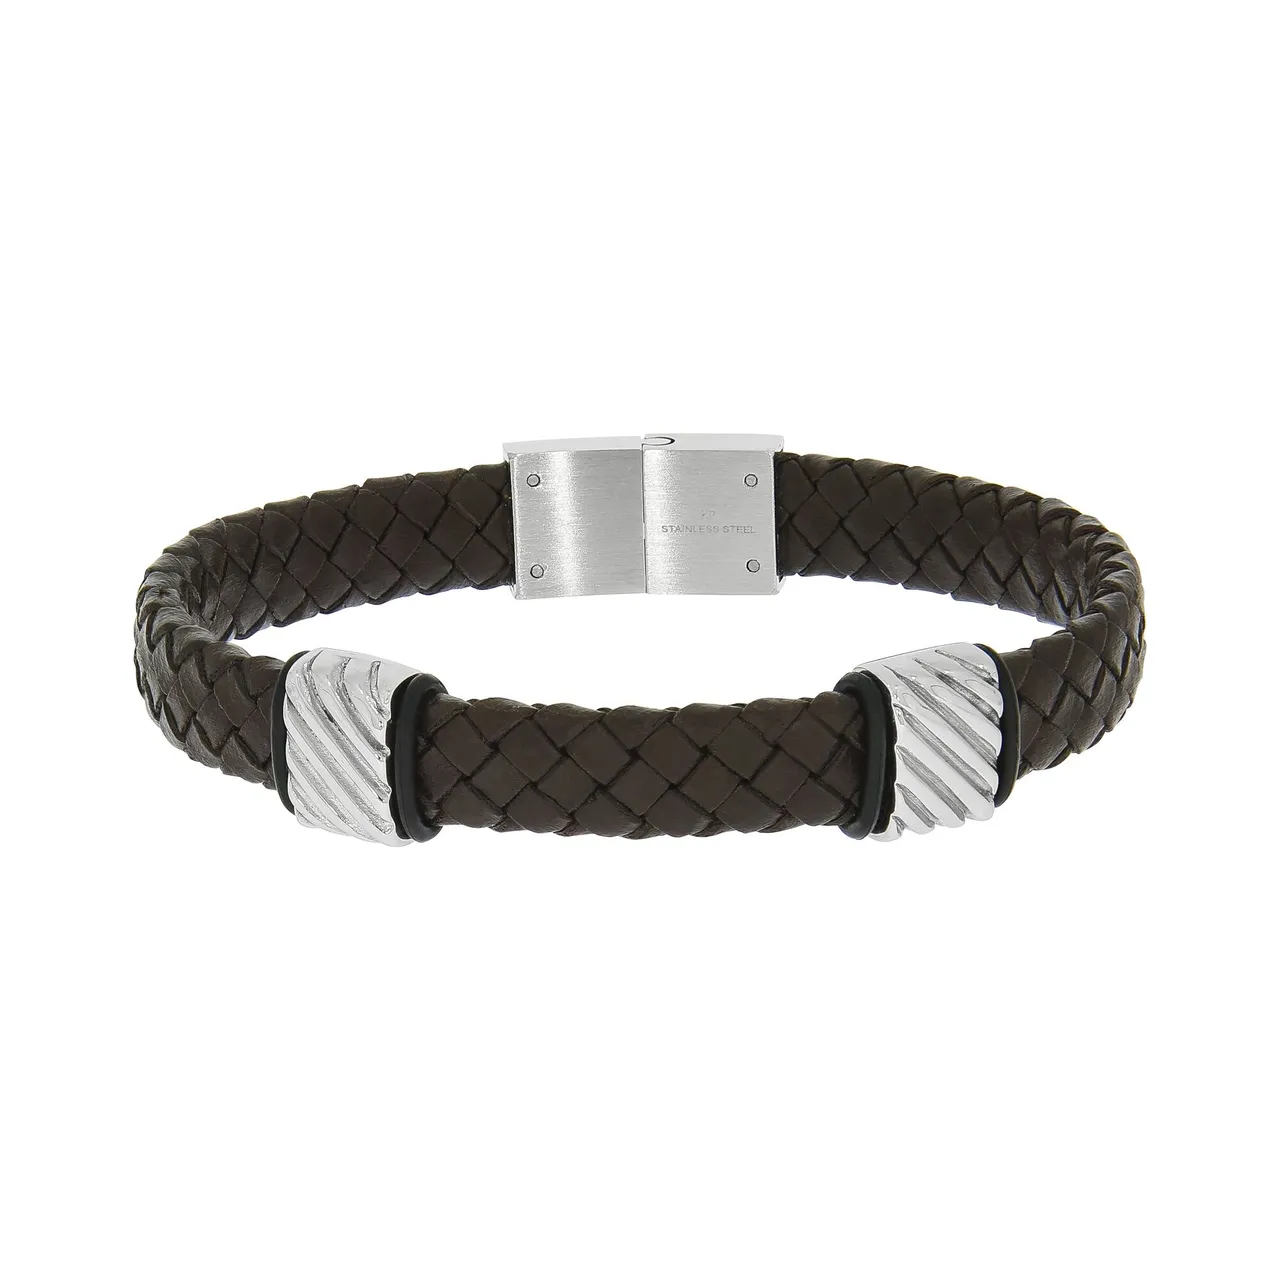 Armband ZEEME "Lederband braun mit Edelstahlverschluss" Armbänder Gr. 21,5cm, Edelstahl, braun Zeeme